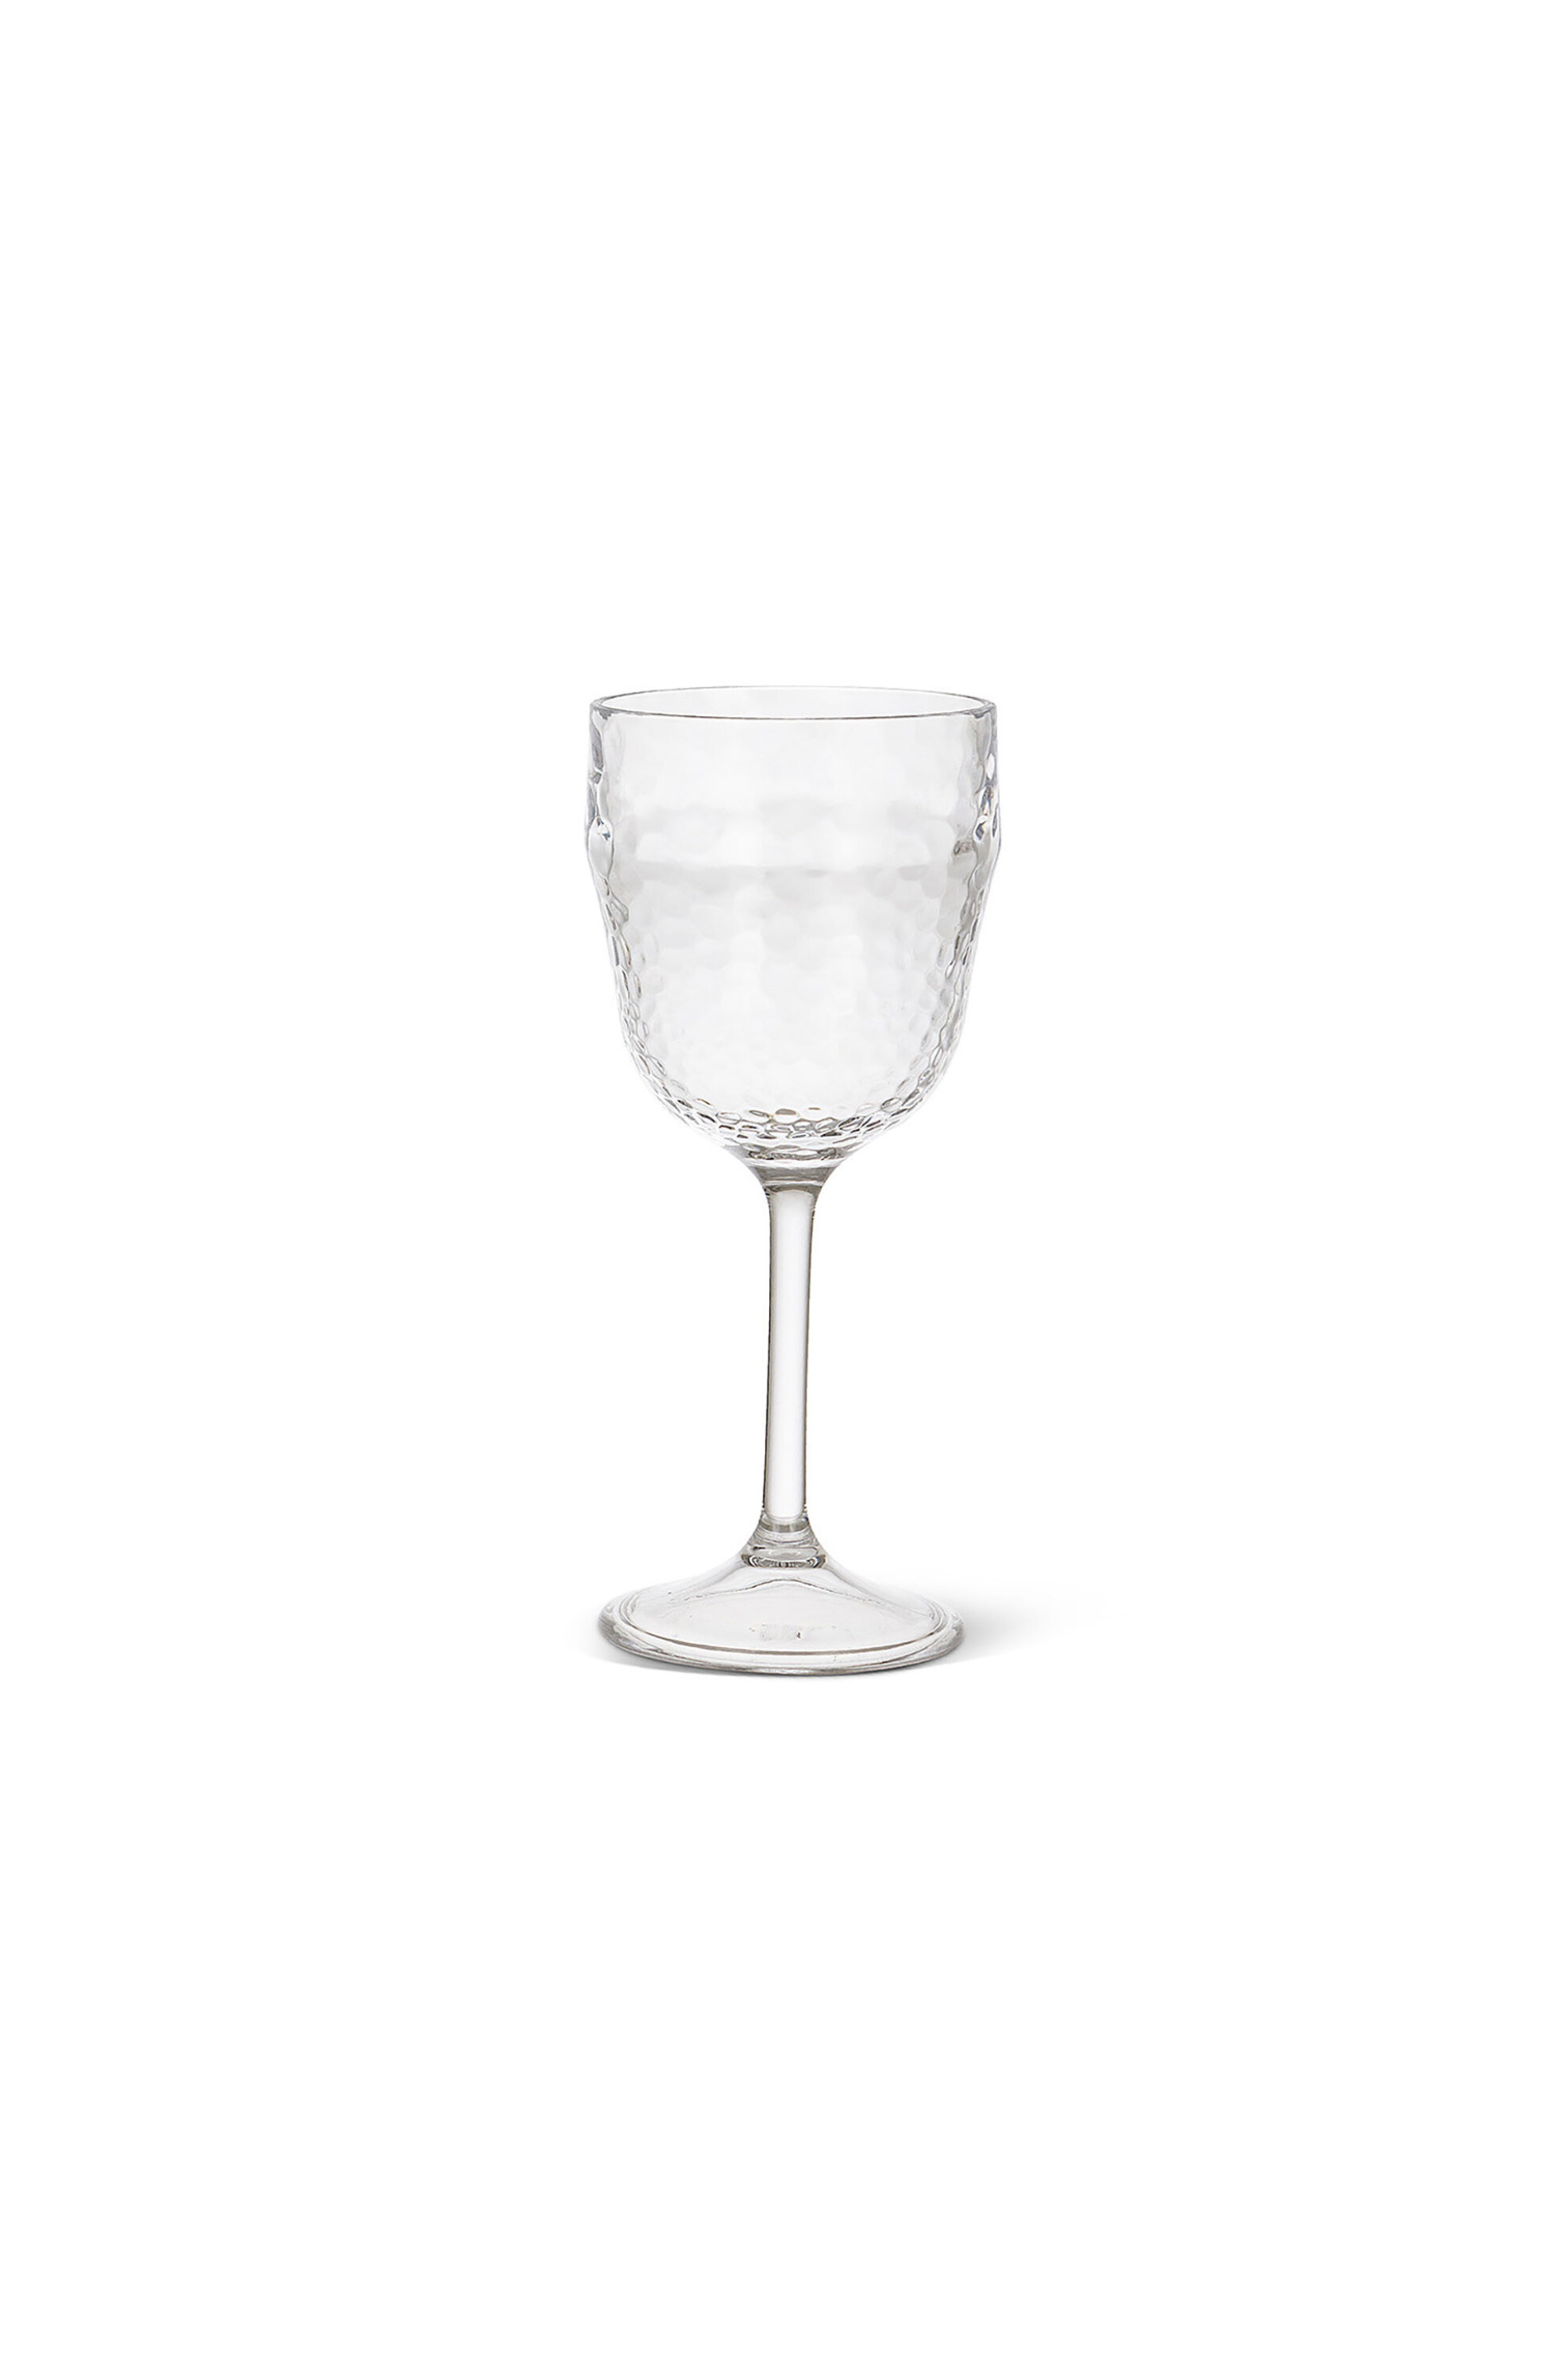 Home > ΚΟΥΖΙΝΑ > Υαλικά > Ποτήρια Coincasa πλαστικό ποτήρι με πόδι και hammered effect 20 x 9 cm - 007365432 Διάφανο